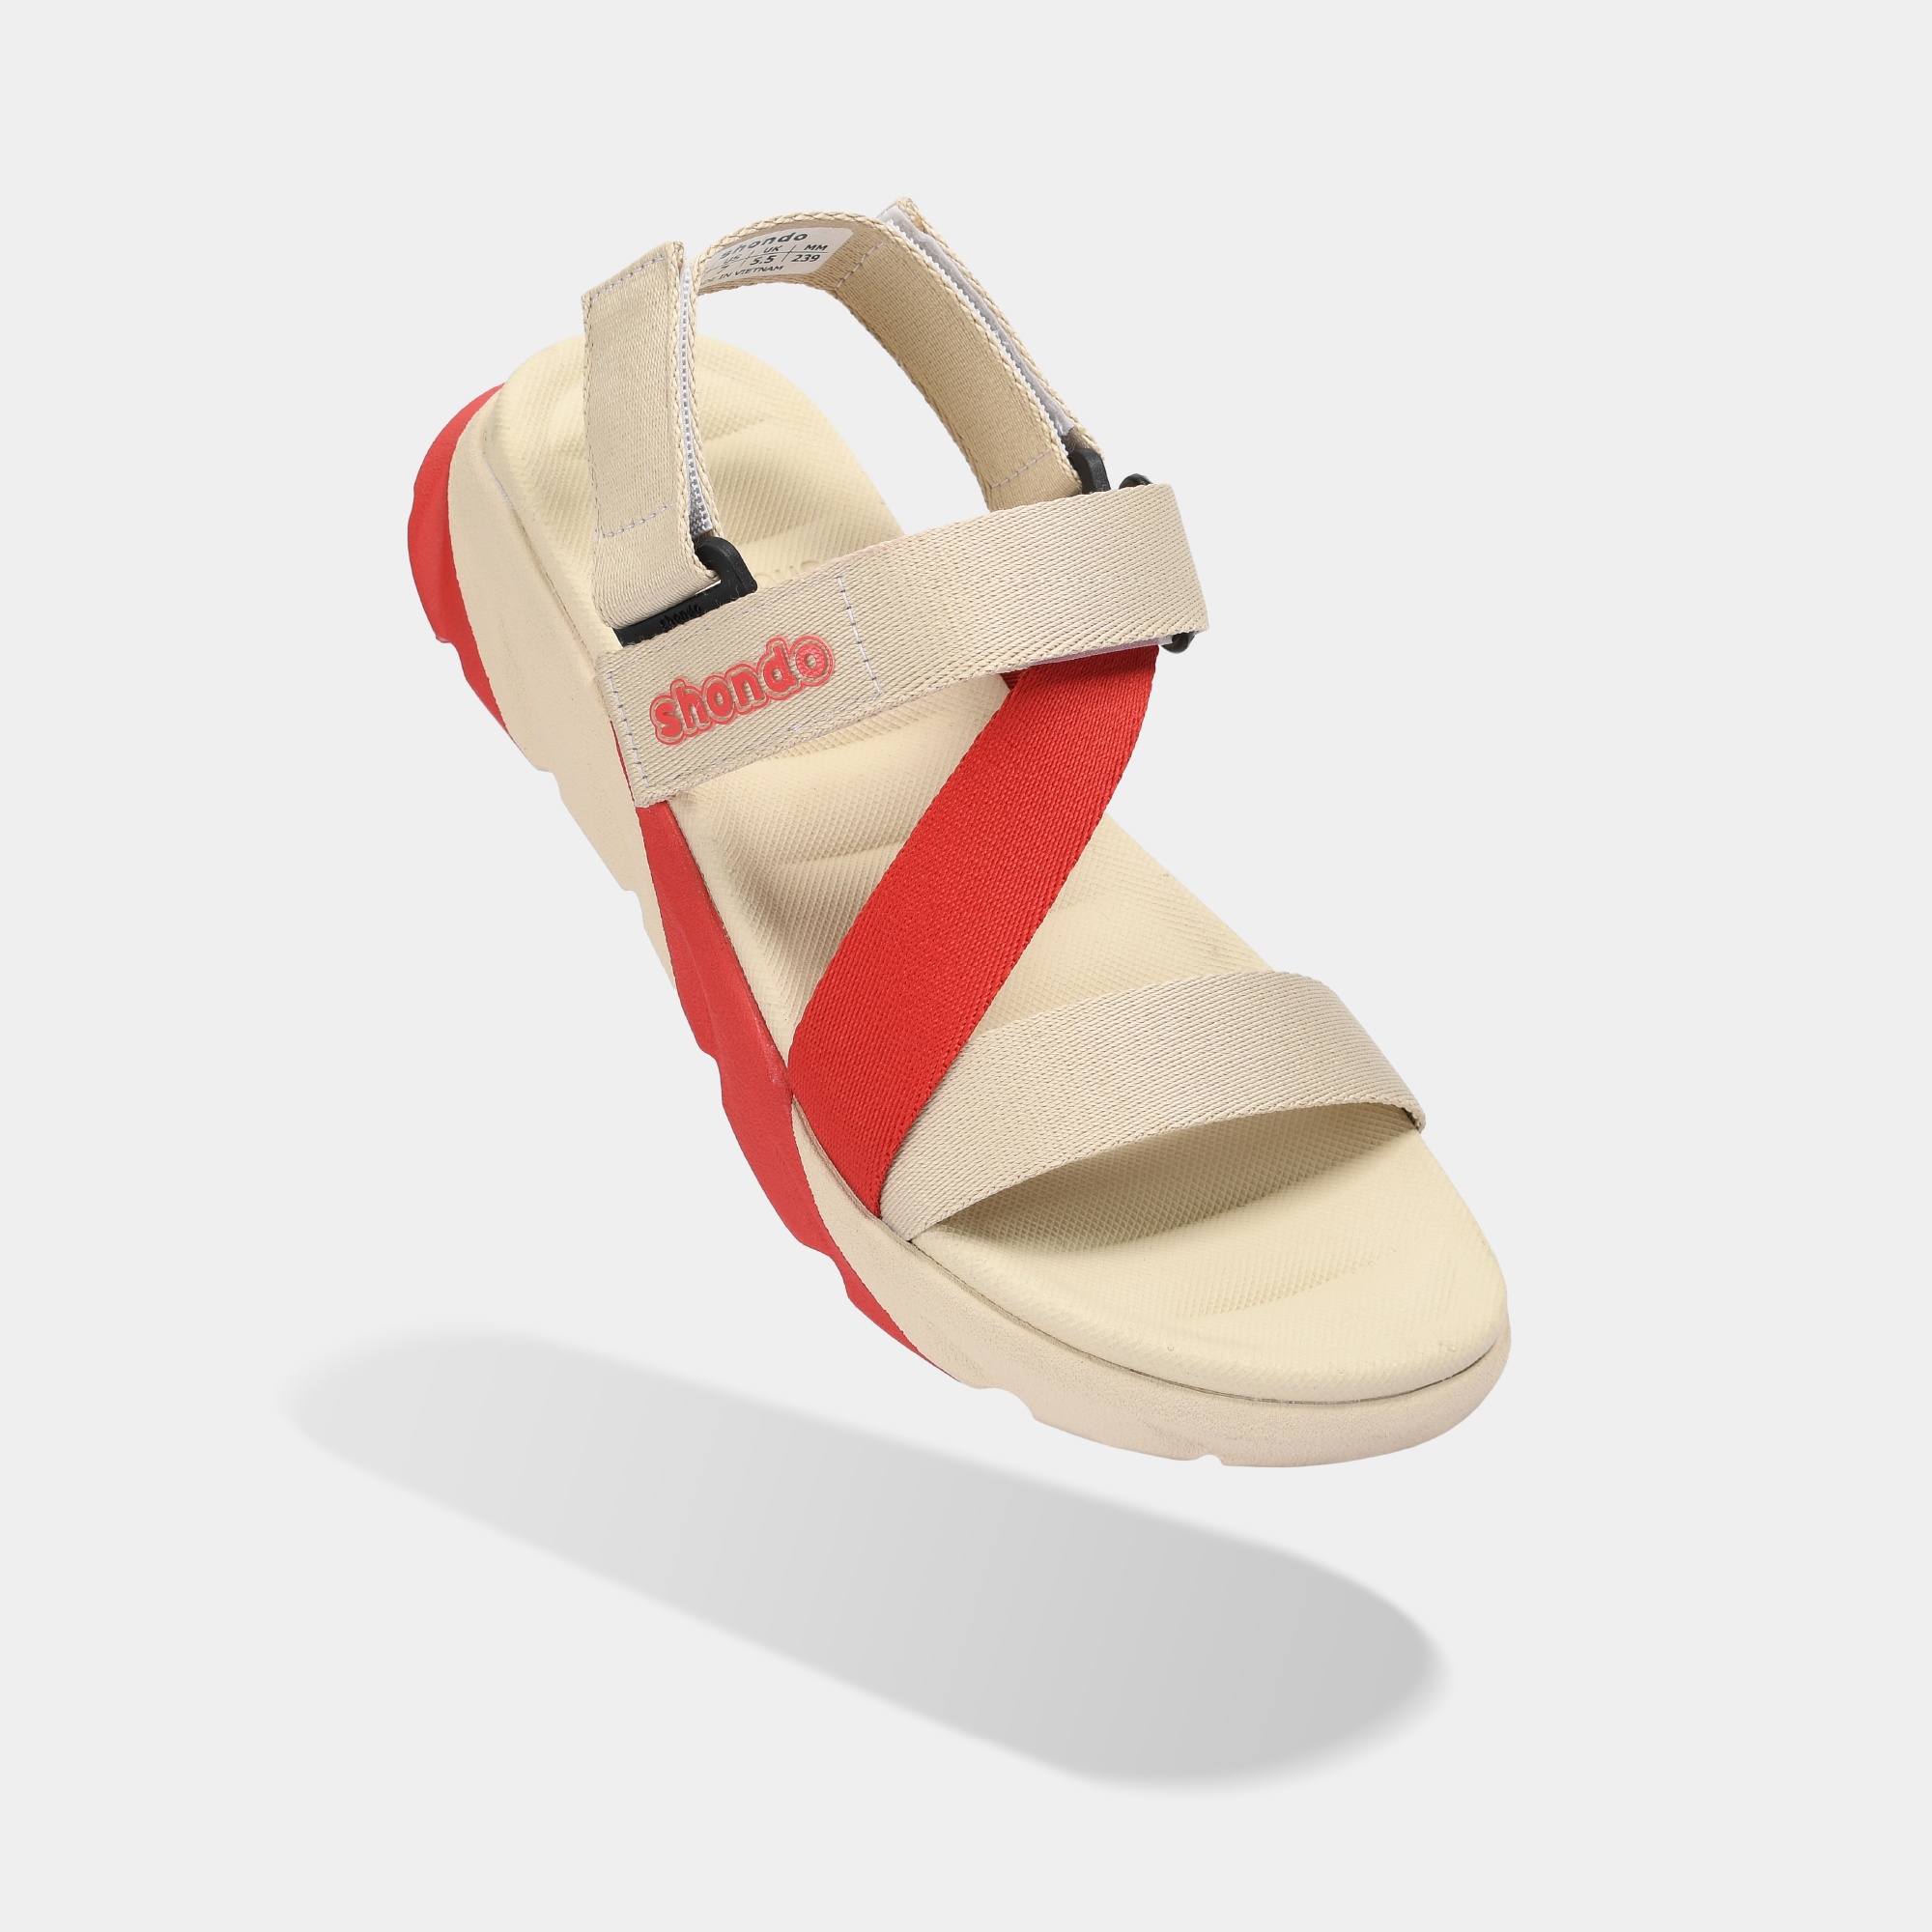 Sandals F6 sport be đỏ